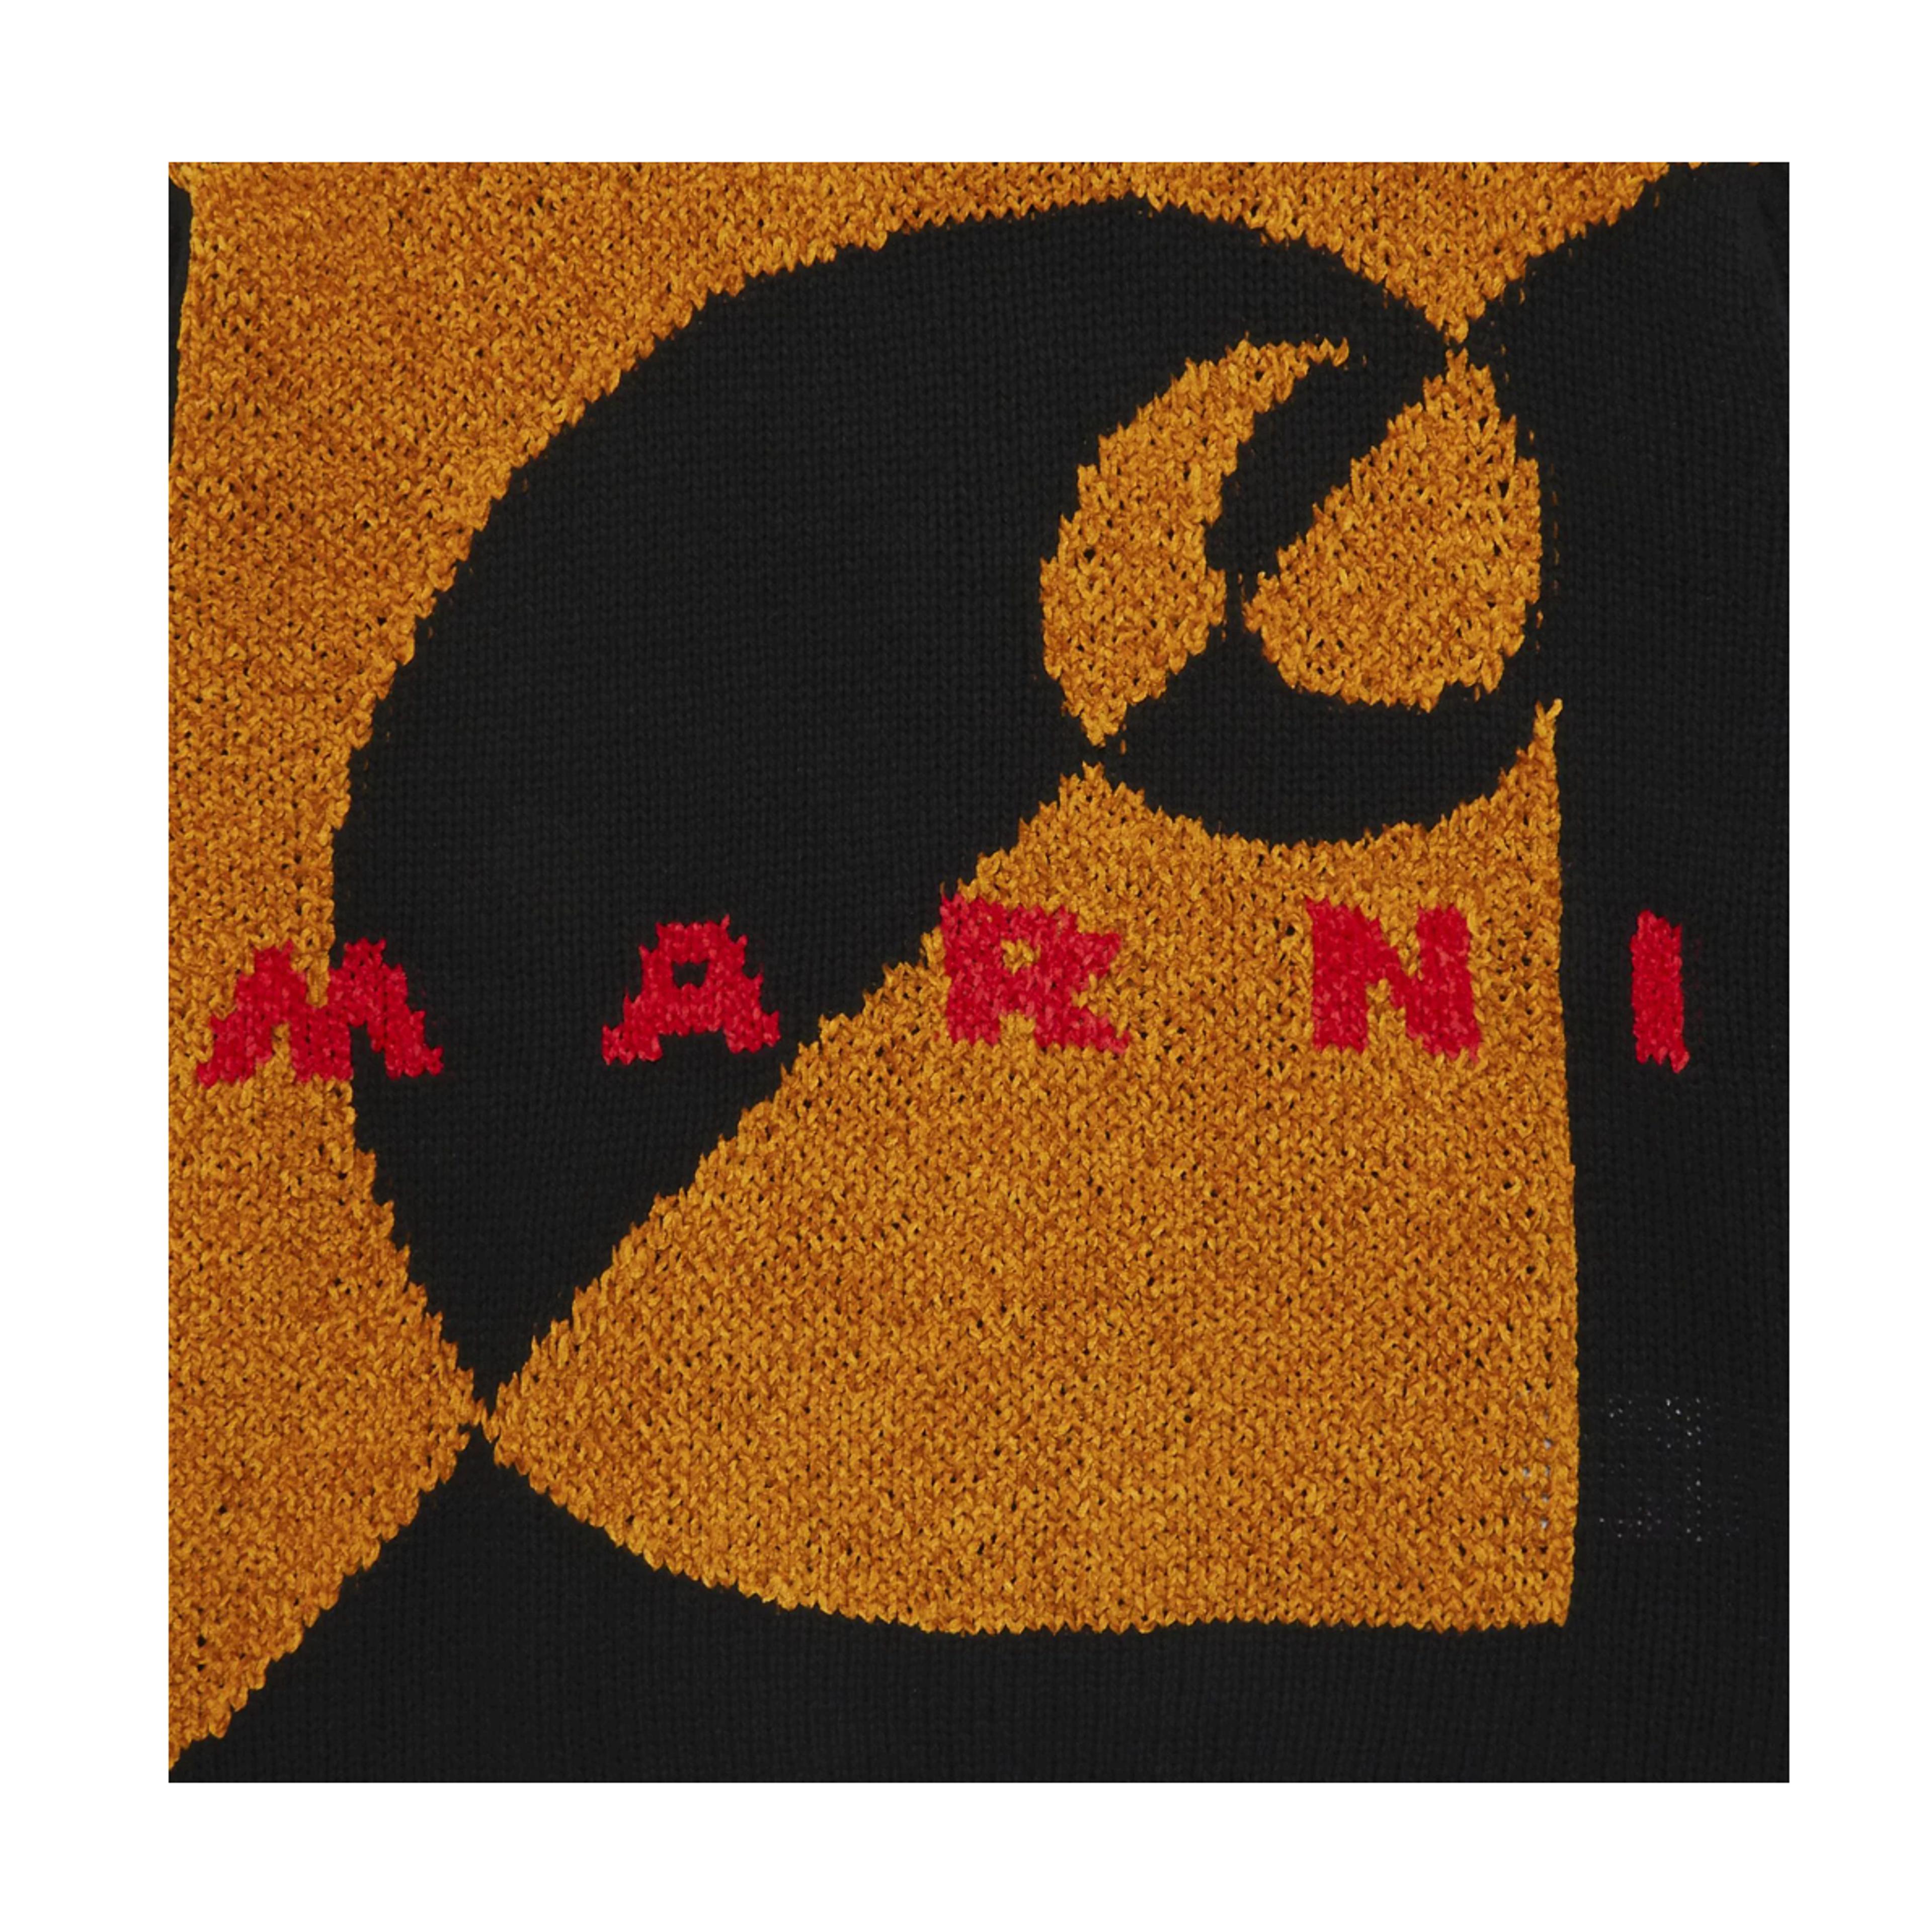 Alternate View 2 of Marni x Carhartt WIP Logo Crewneck Sweater Black